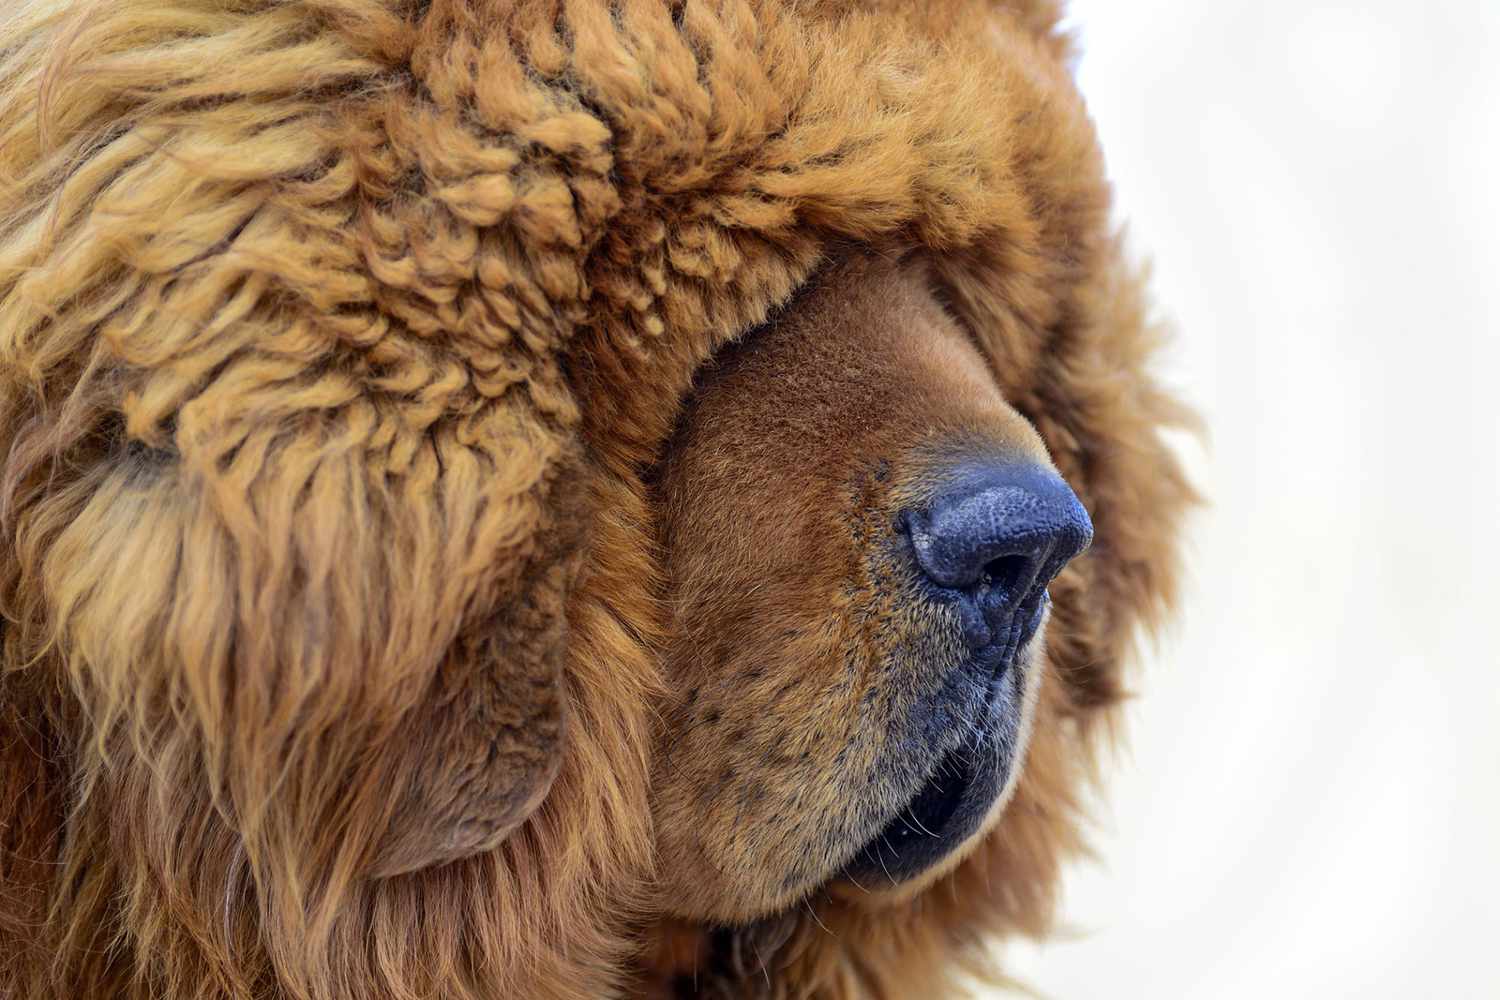 Tibetan Mastiff Dog Breed Information & Characteristics | Daily Paws